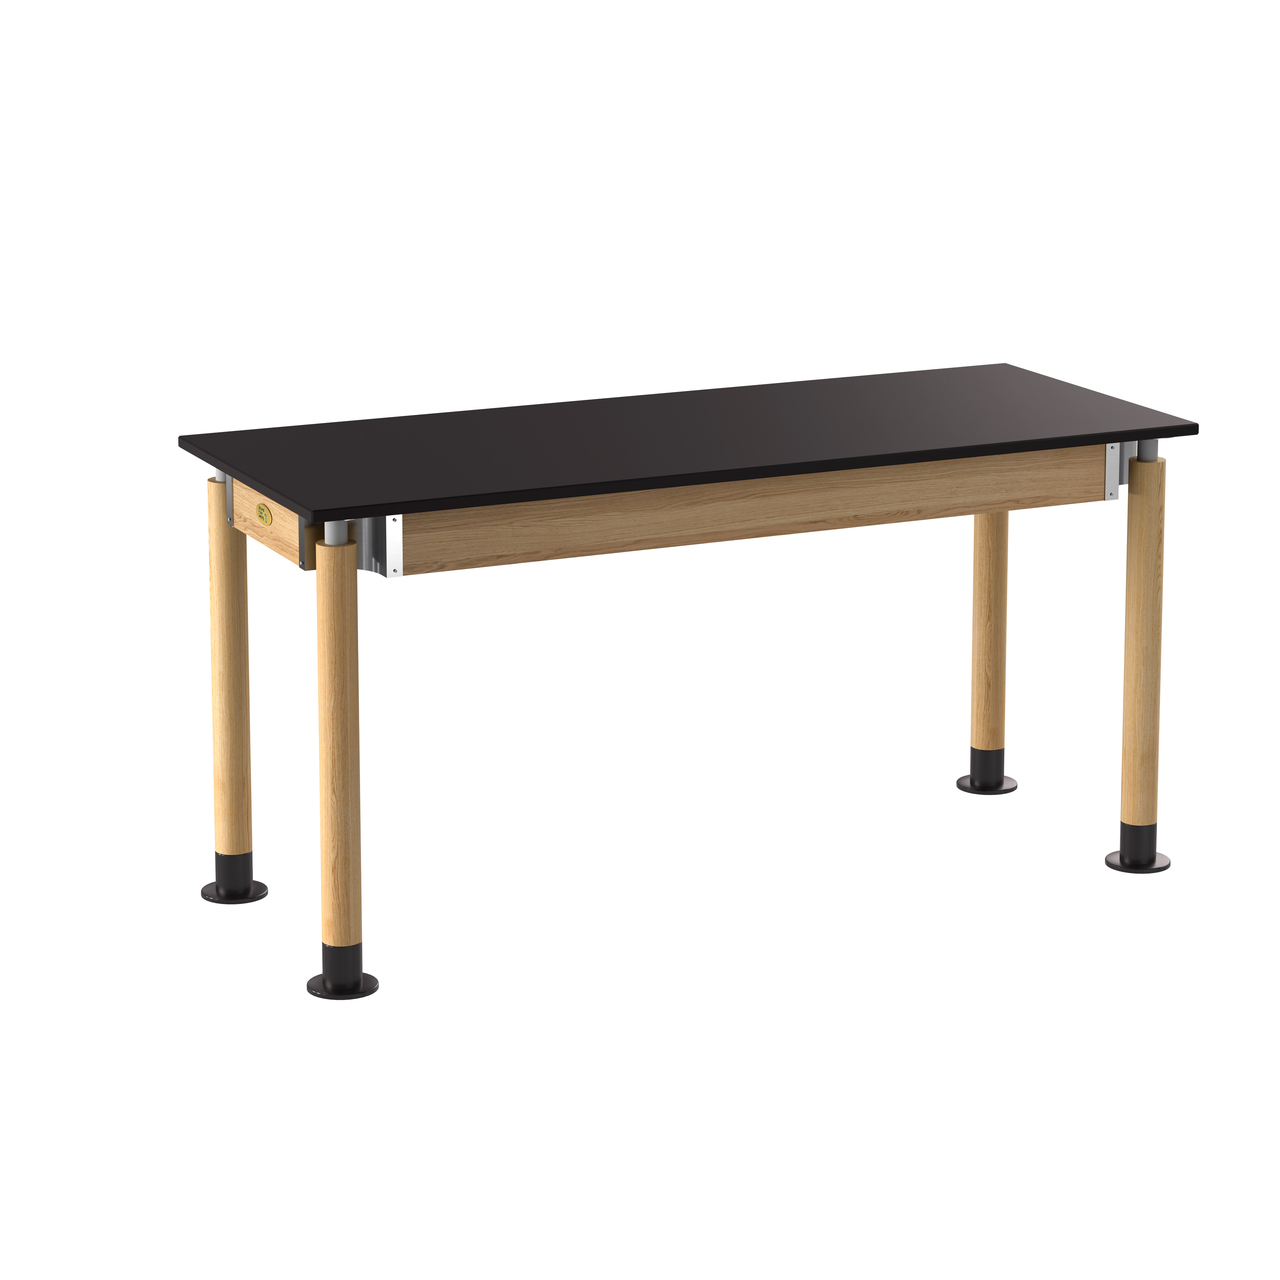 NPS Signature Science Lab Table, Oak, 24"x60", Chemical Resistant Top - Black Top and Oak Leg